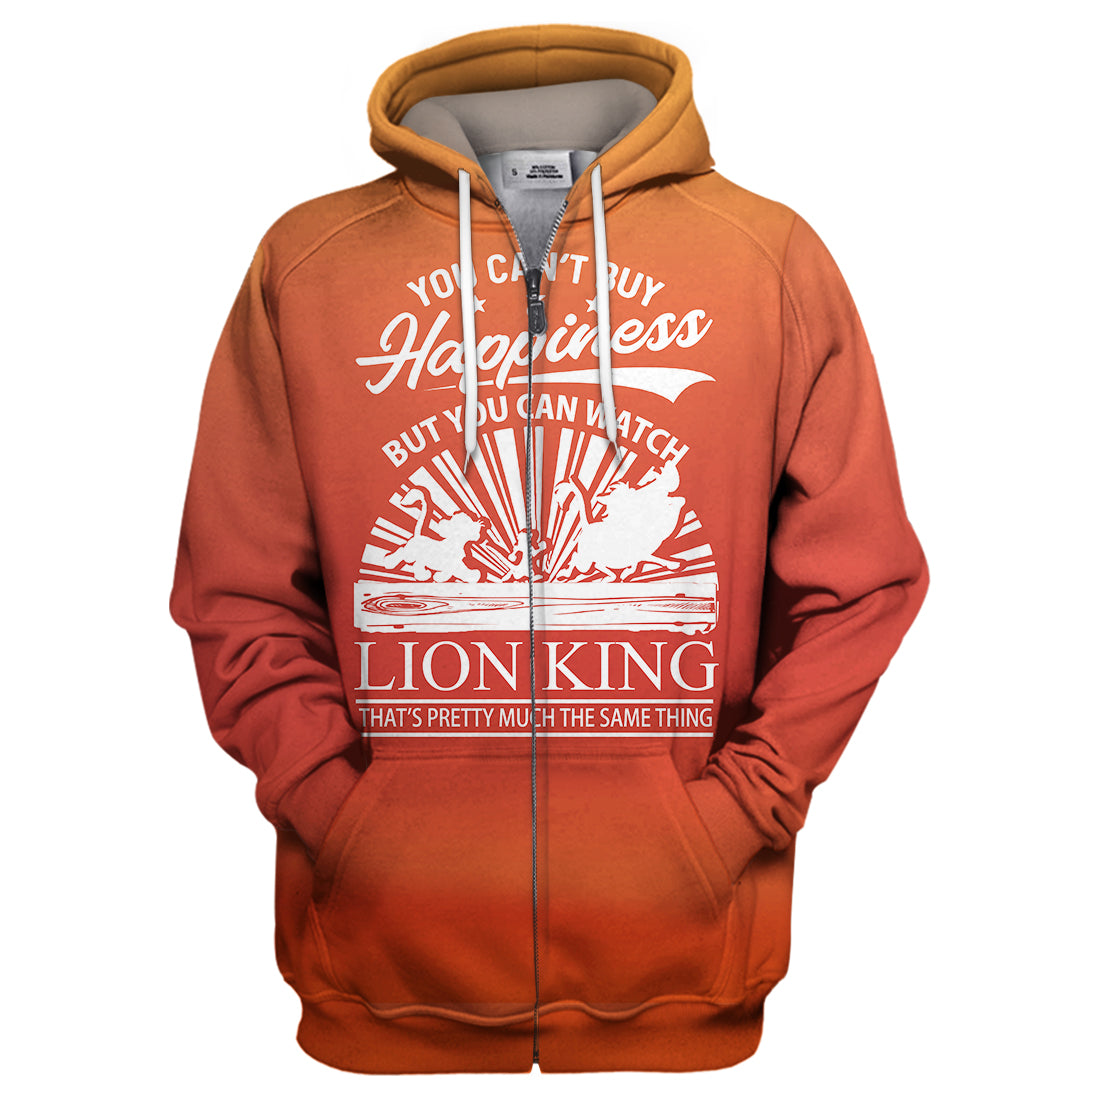 Unifinz DN LK T-shirt You Can't Buy Happiness You Can Watch Lion King 3D Print T-shirt Amazing DN LK Hoodie Sweater Tank 2022